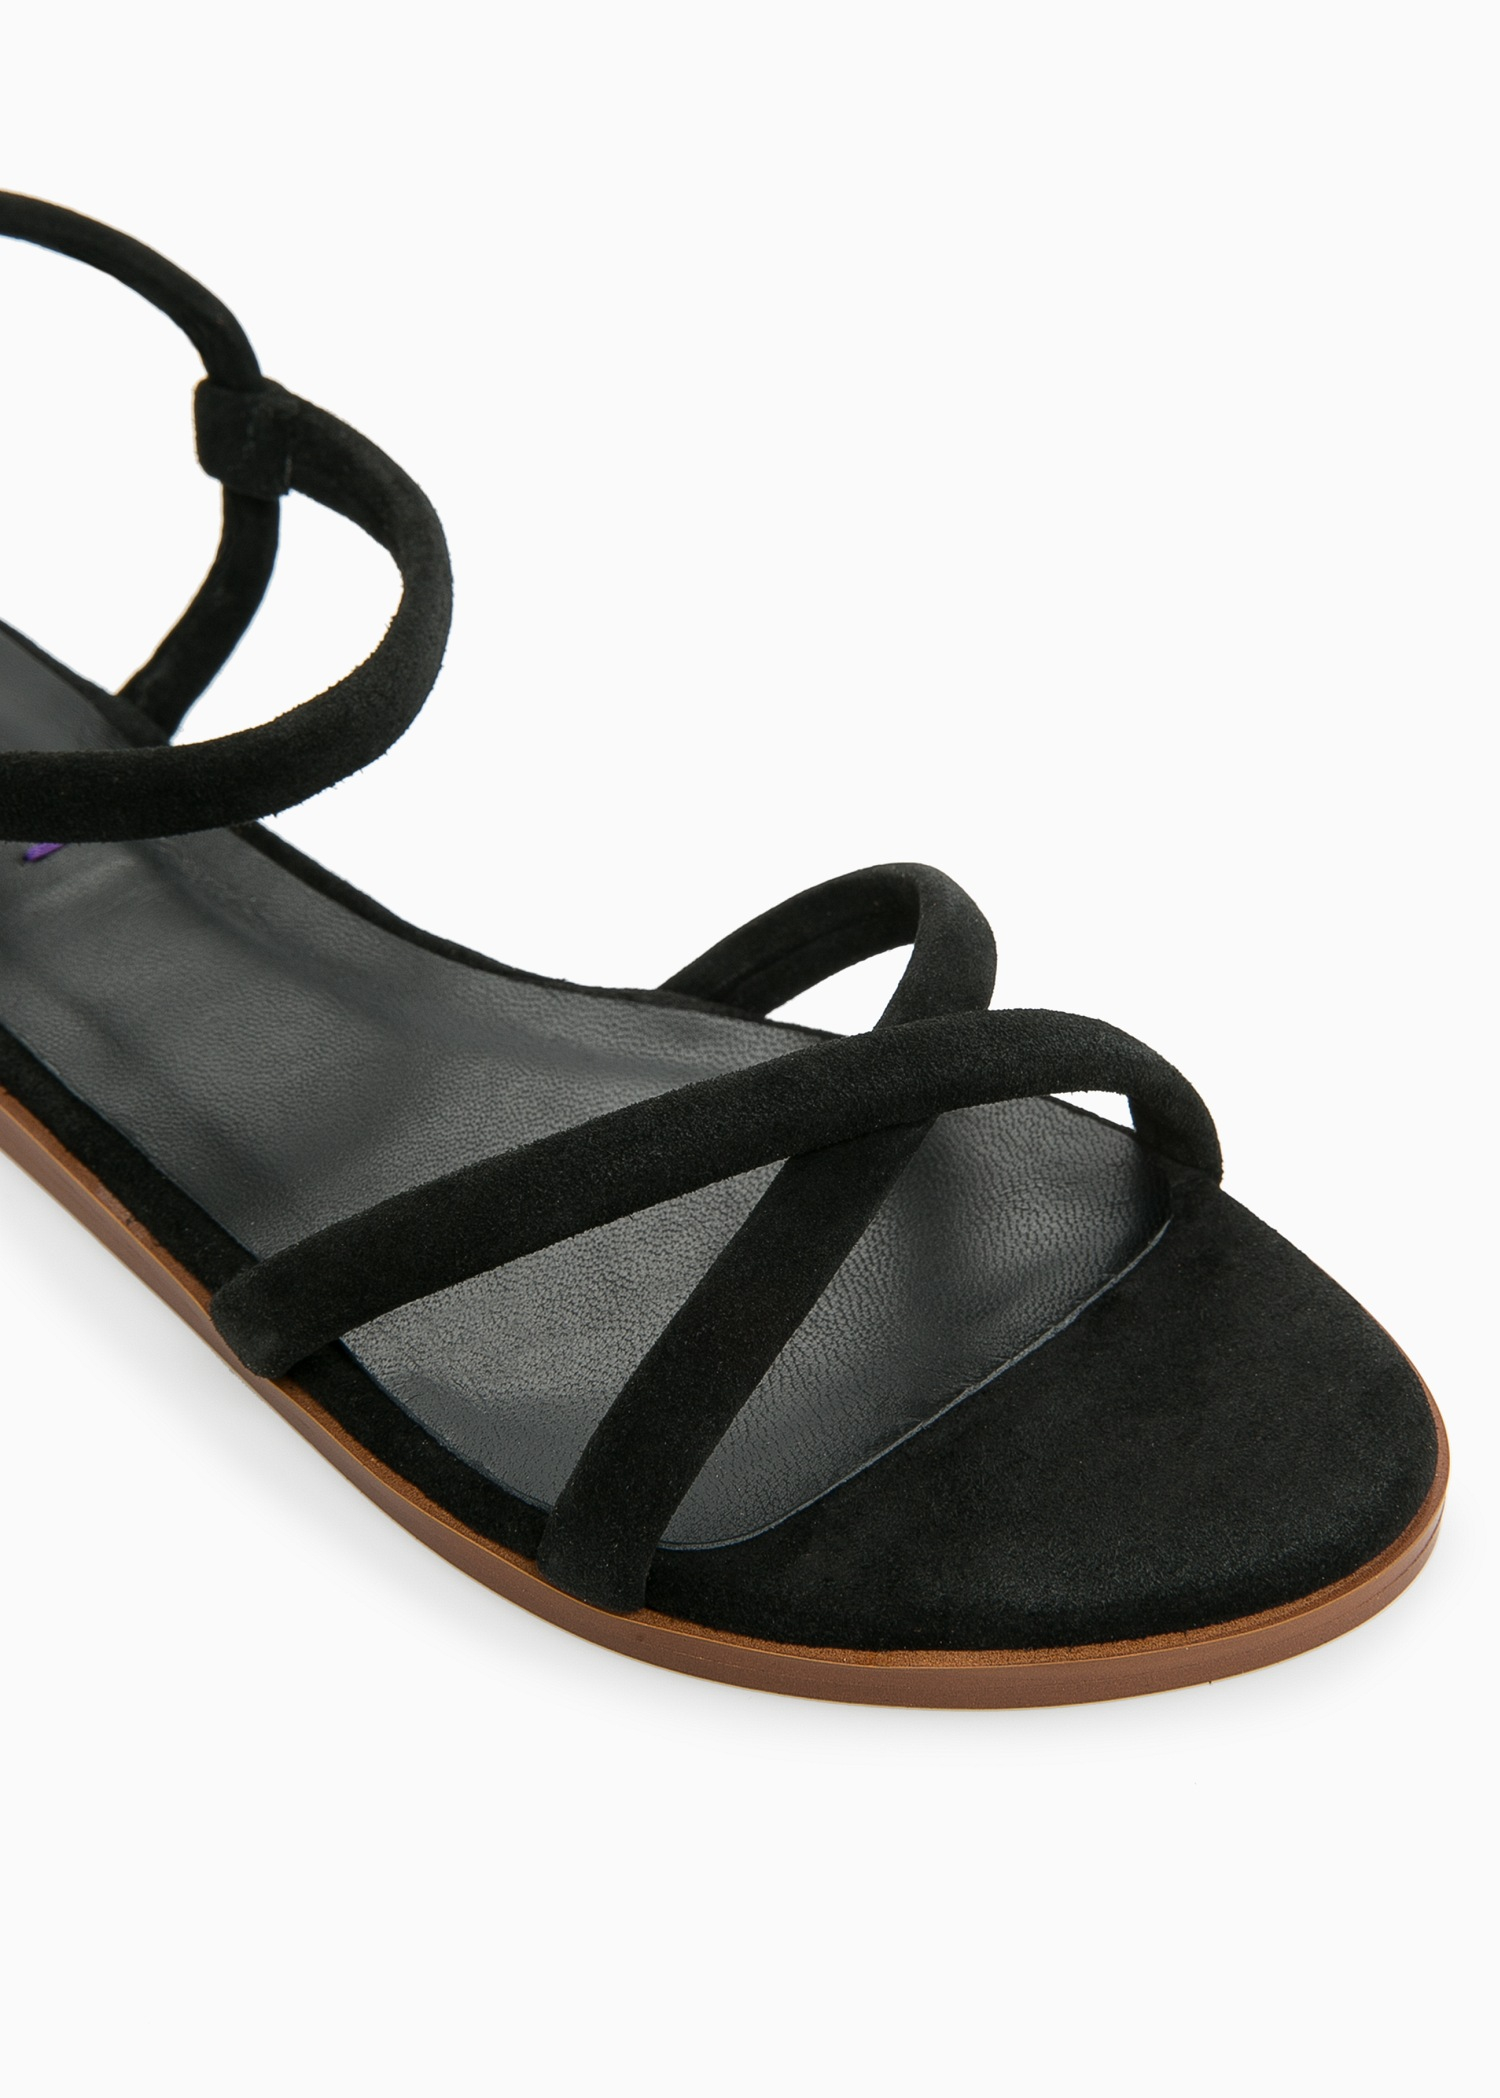 Lyst - Violeta By Mango Suede Flat Sandals in Black